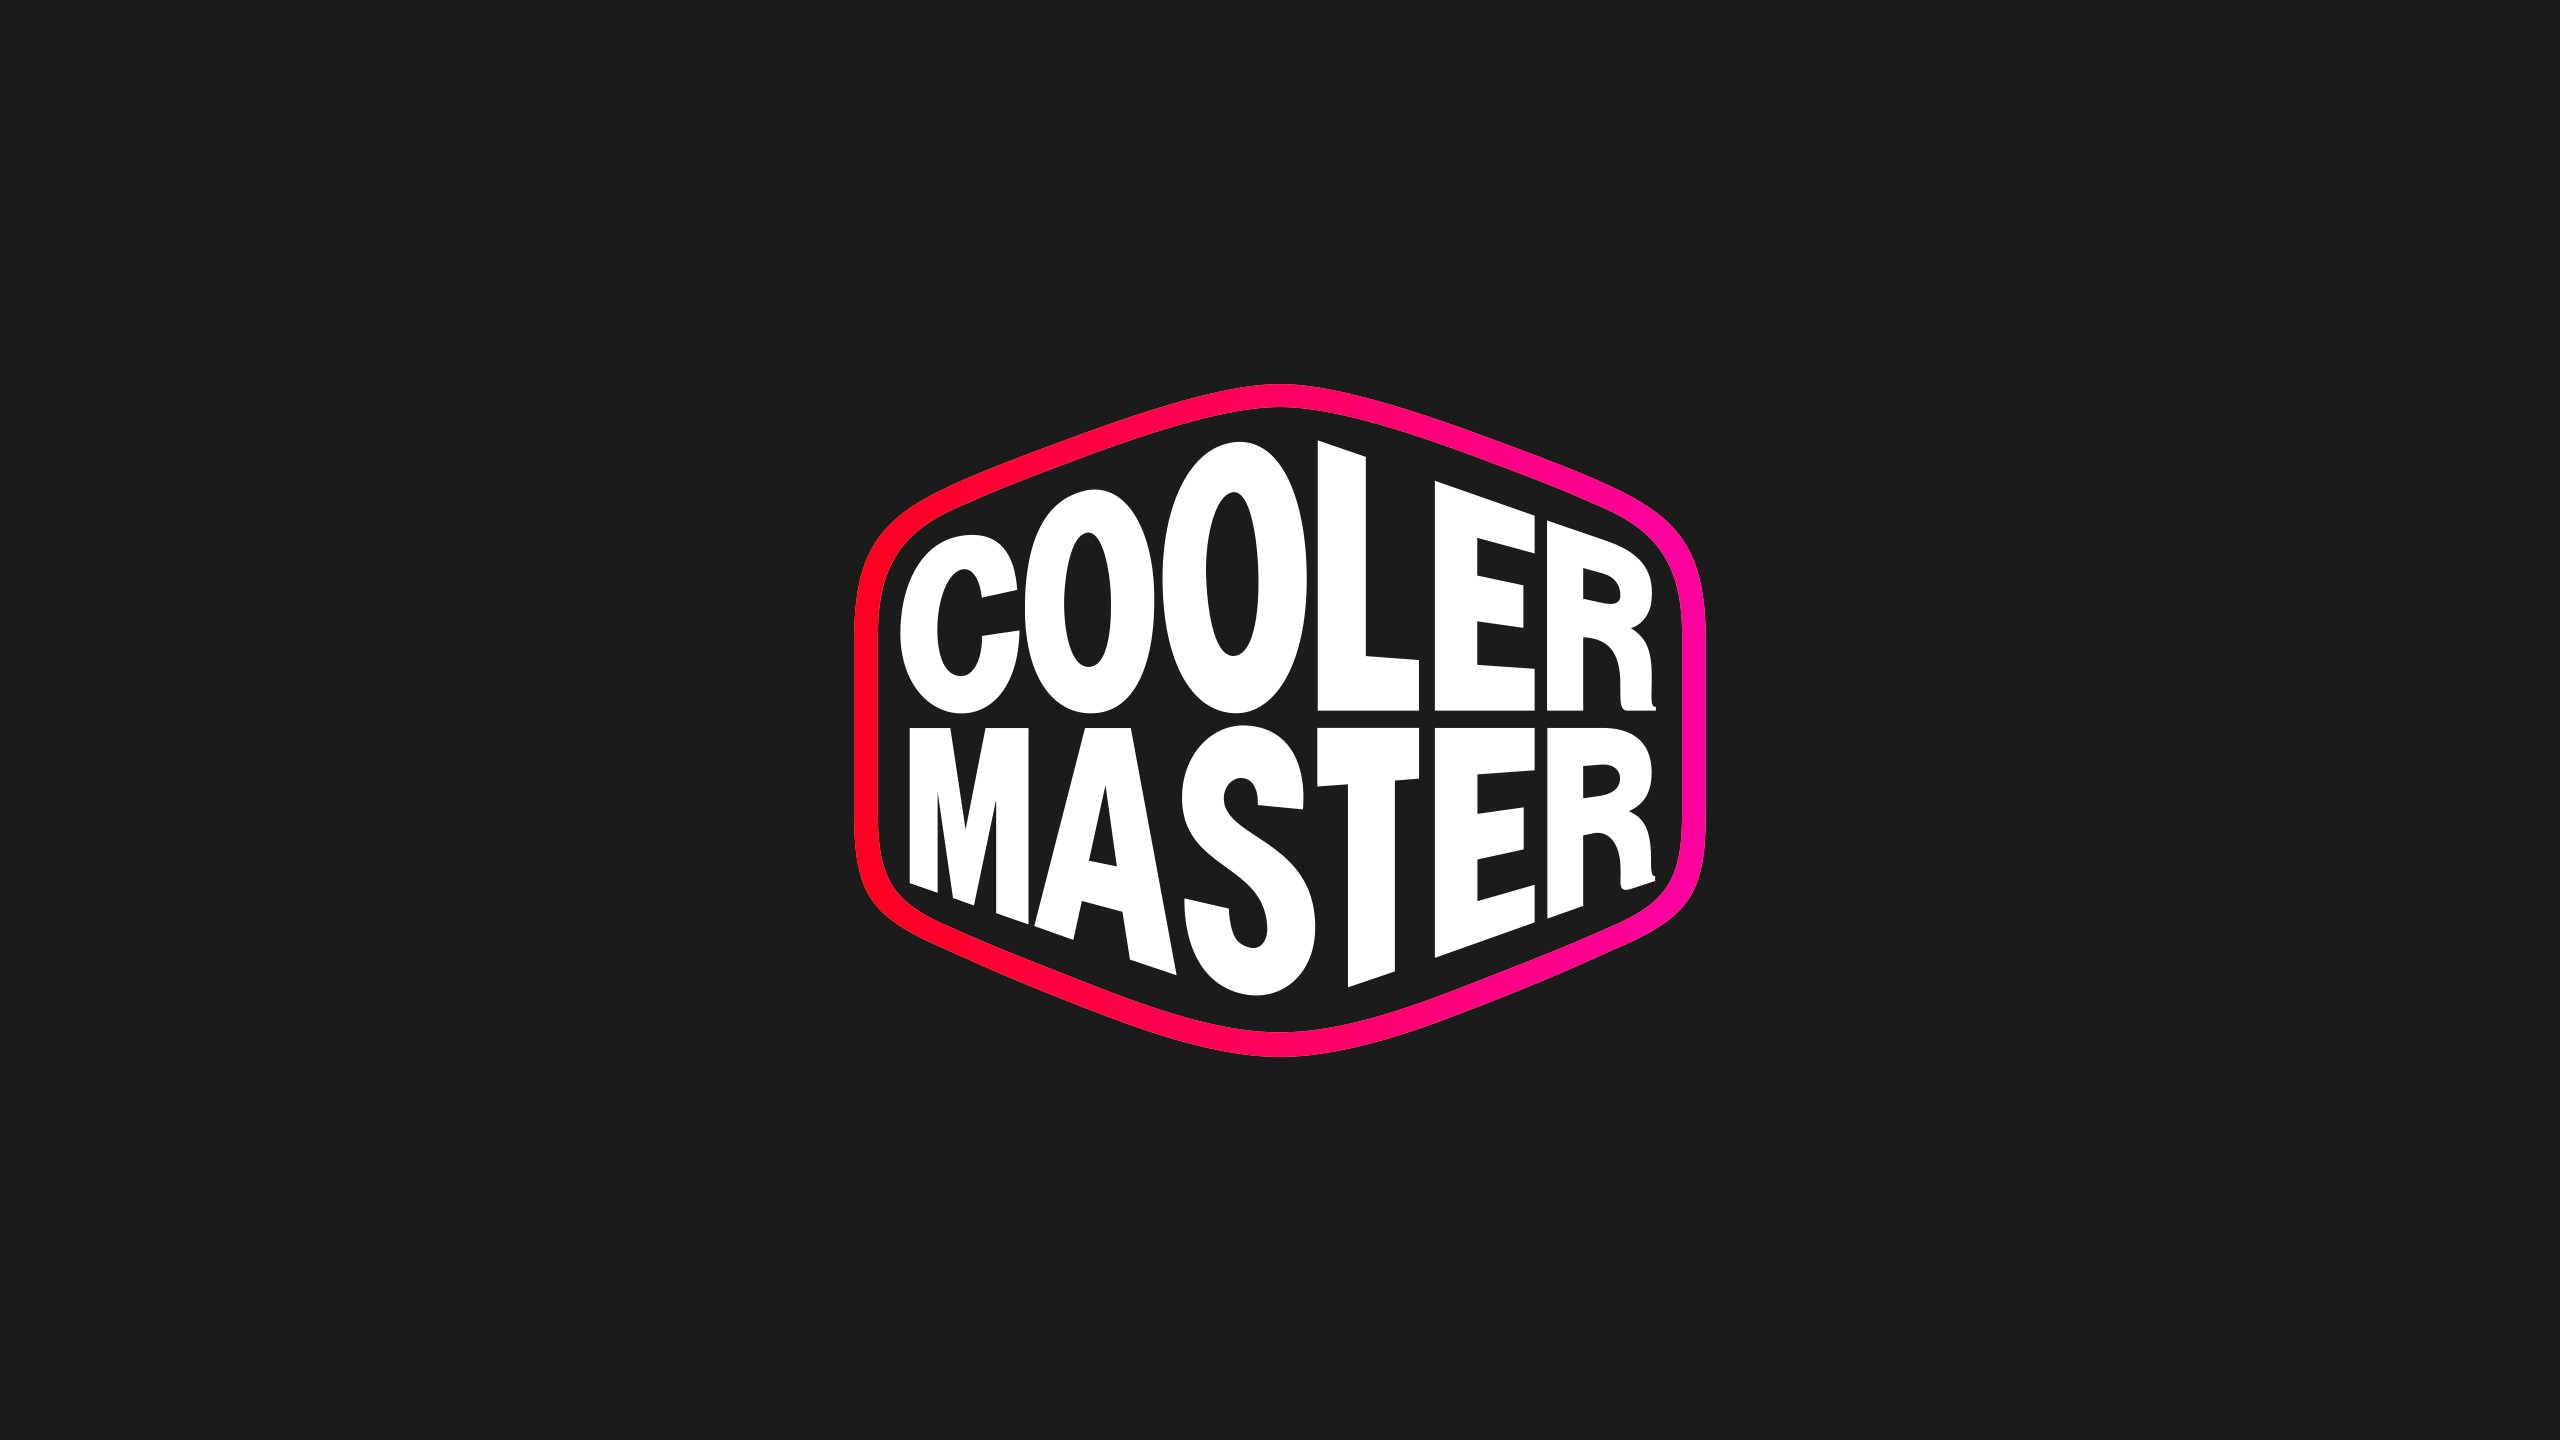 Cooler Master RGB - VIDEO - Wallpaper Engine by MrRichardEdits on DeviantArt